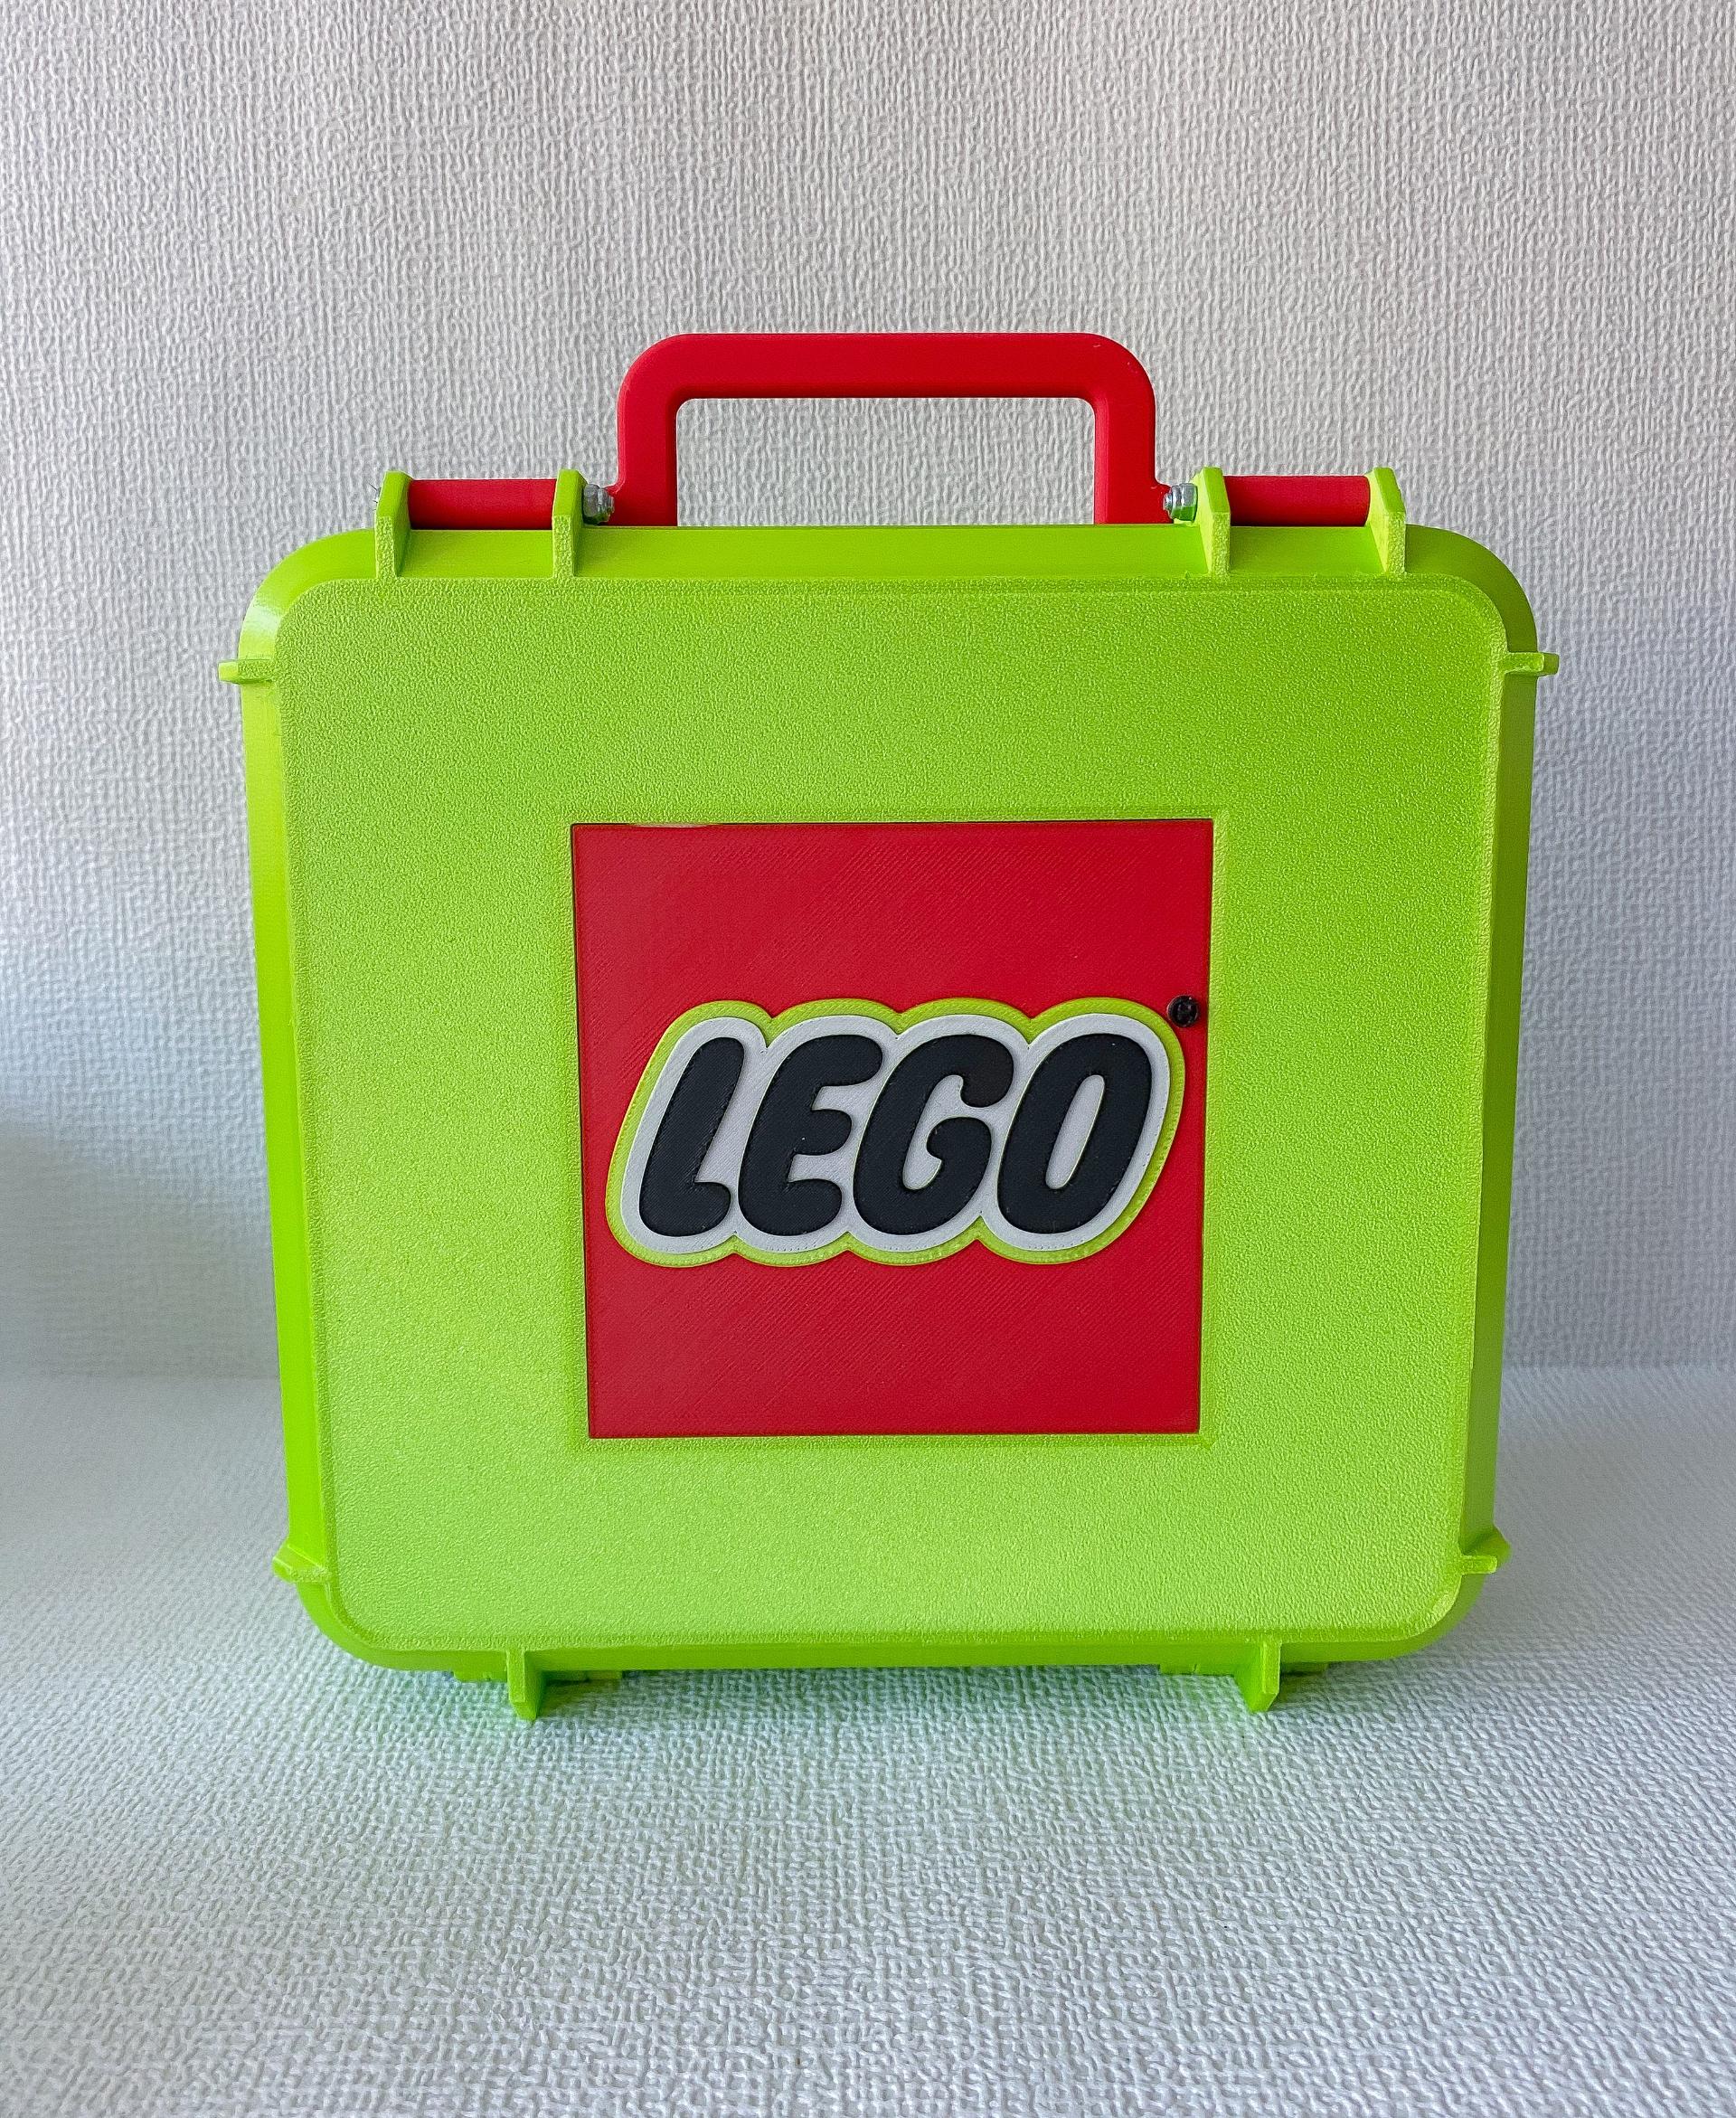 Lego Sorter Box Multicolor - Strange but beautiful color combo.
Polymaker filament - 3d model